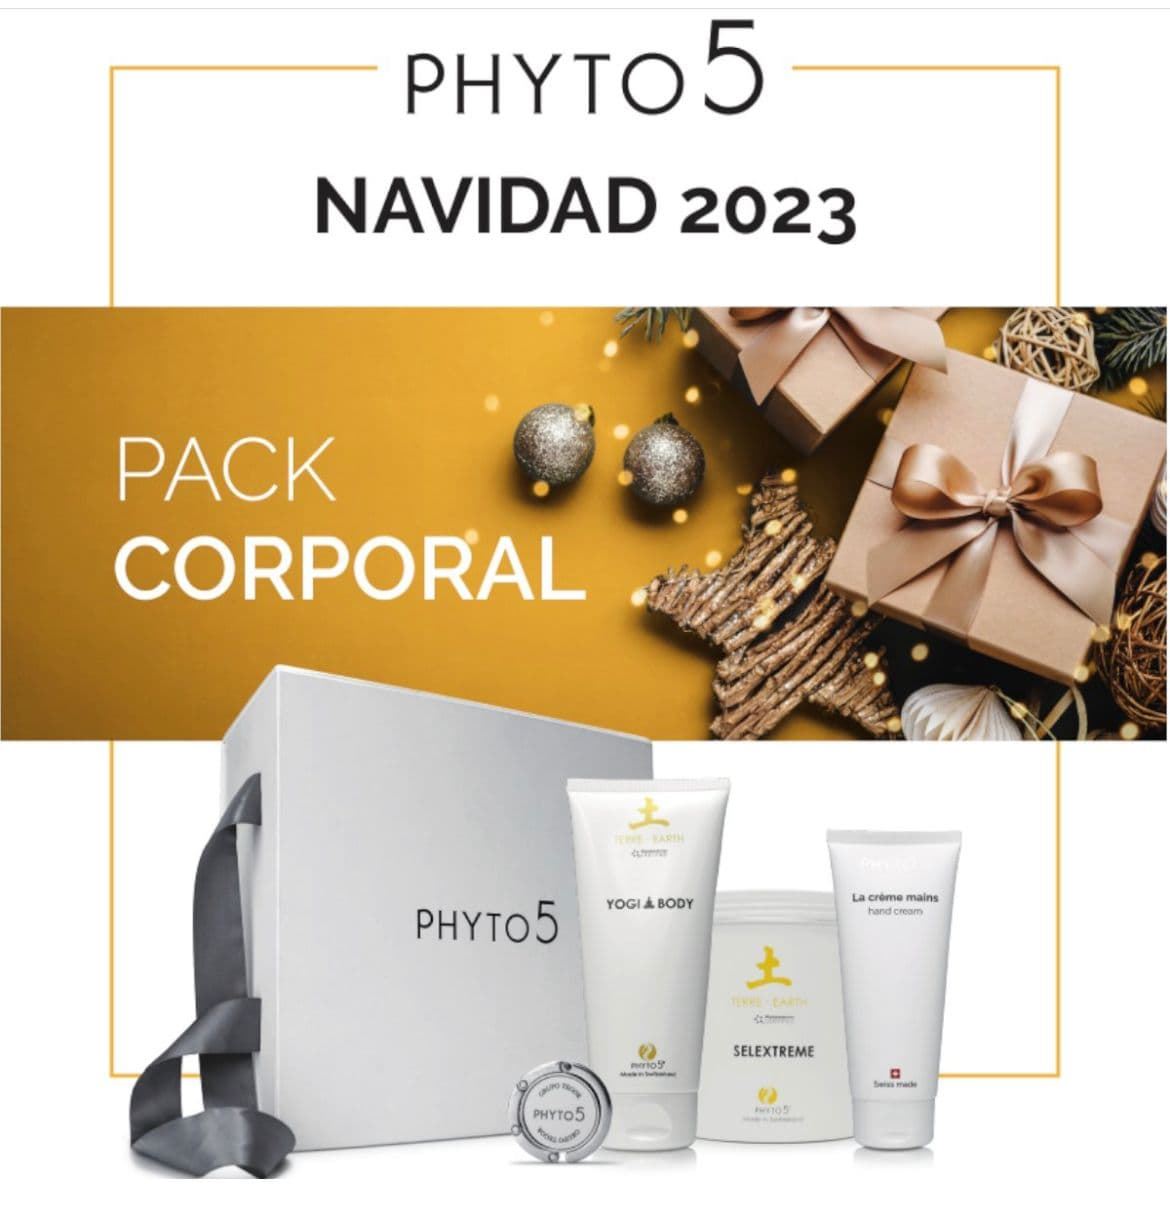 Phyto5 - PACK CORPORAL NAVIDAD - Imagen 1